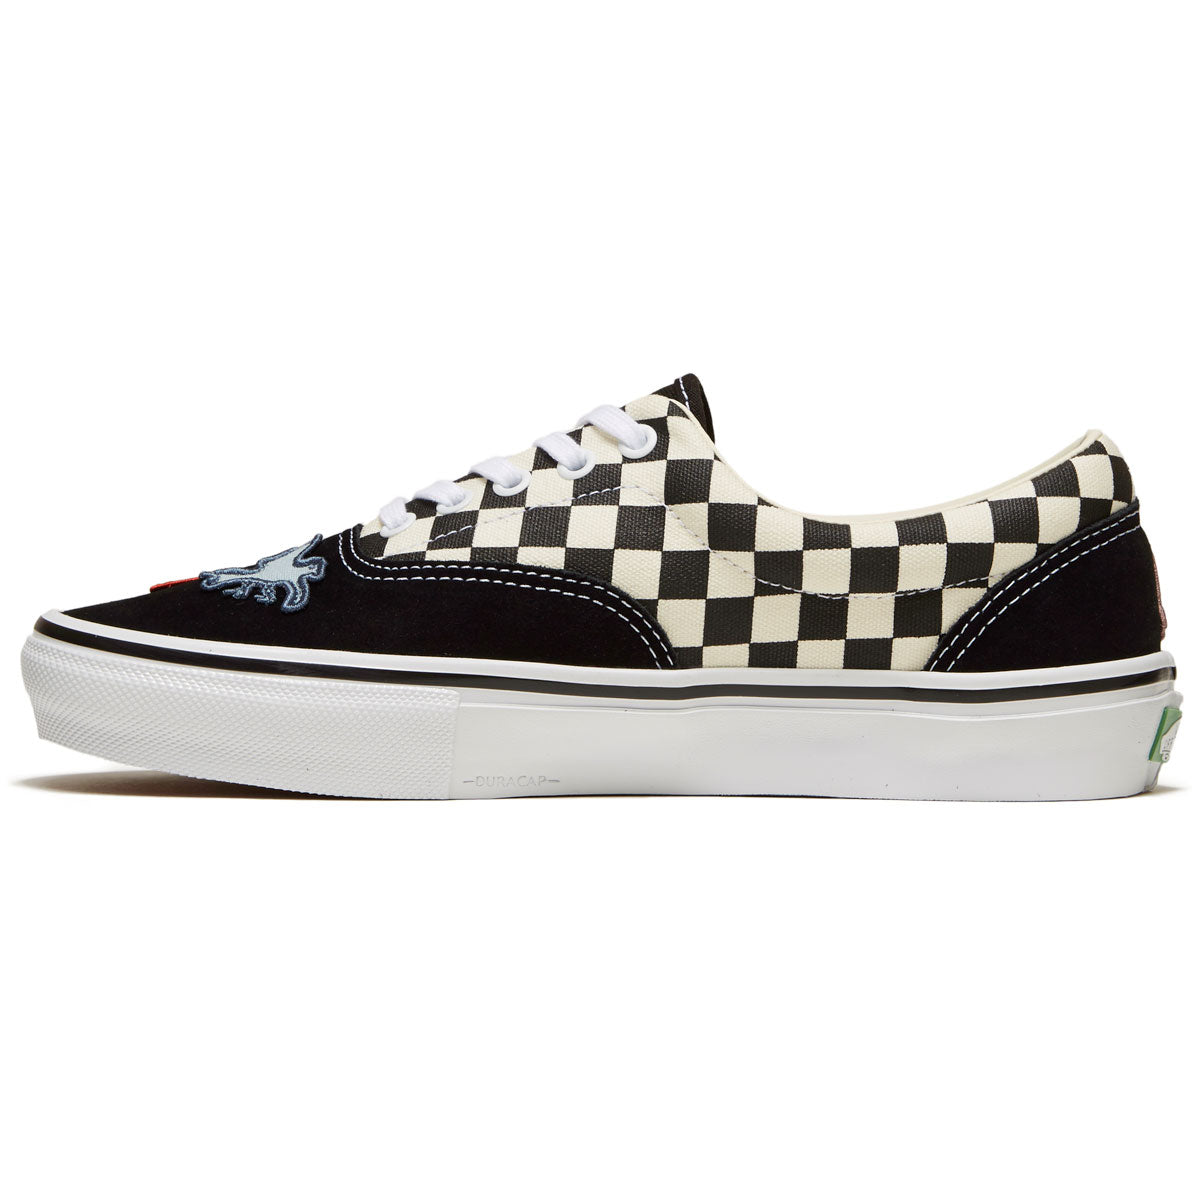 Vans Skate Era Shoes - Skateistan Checkerboard image 2